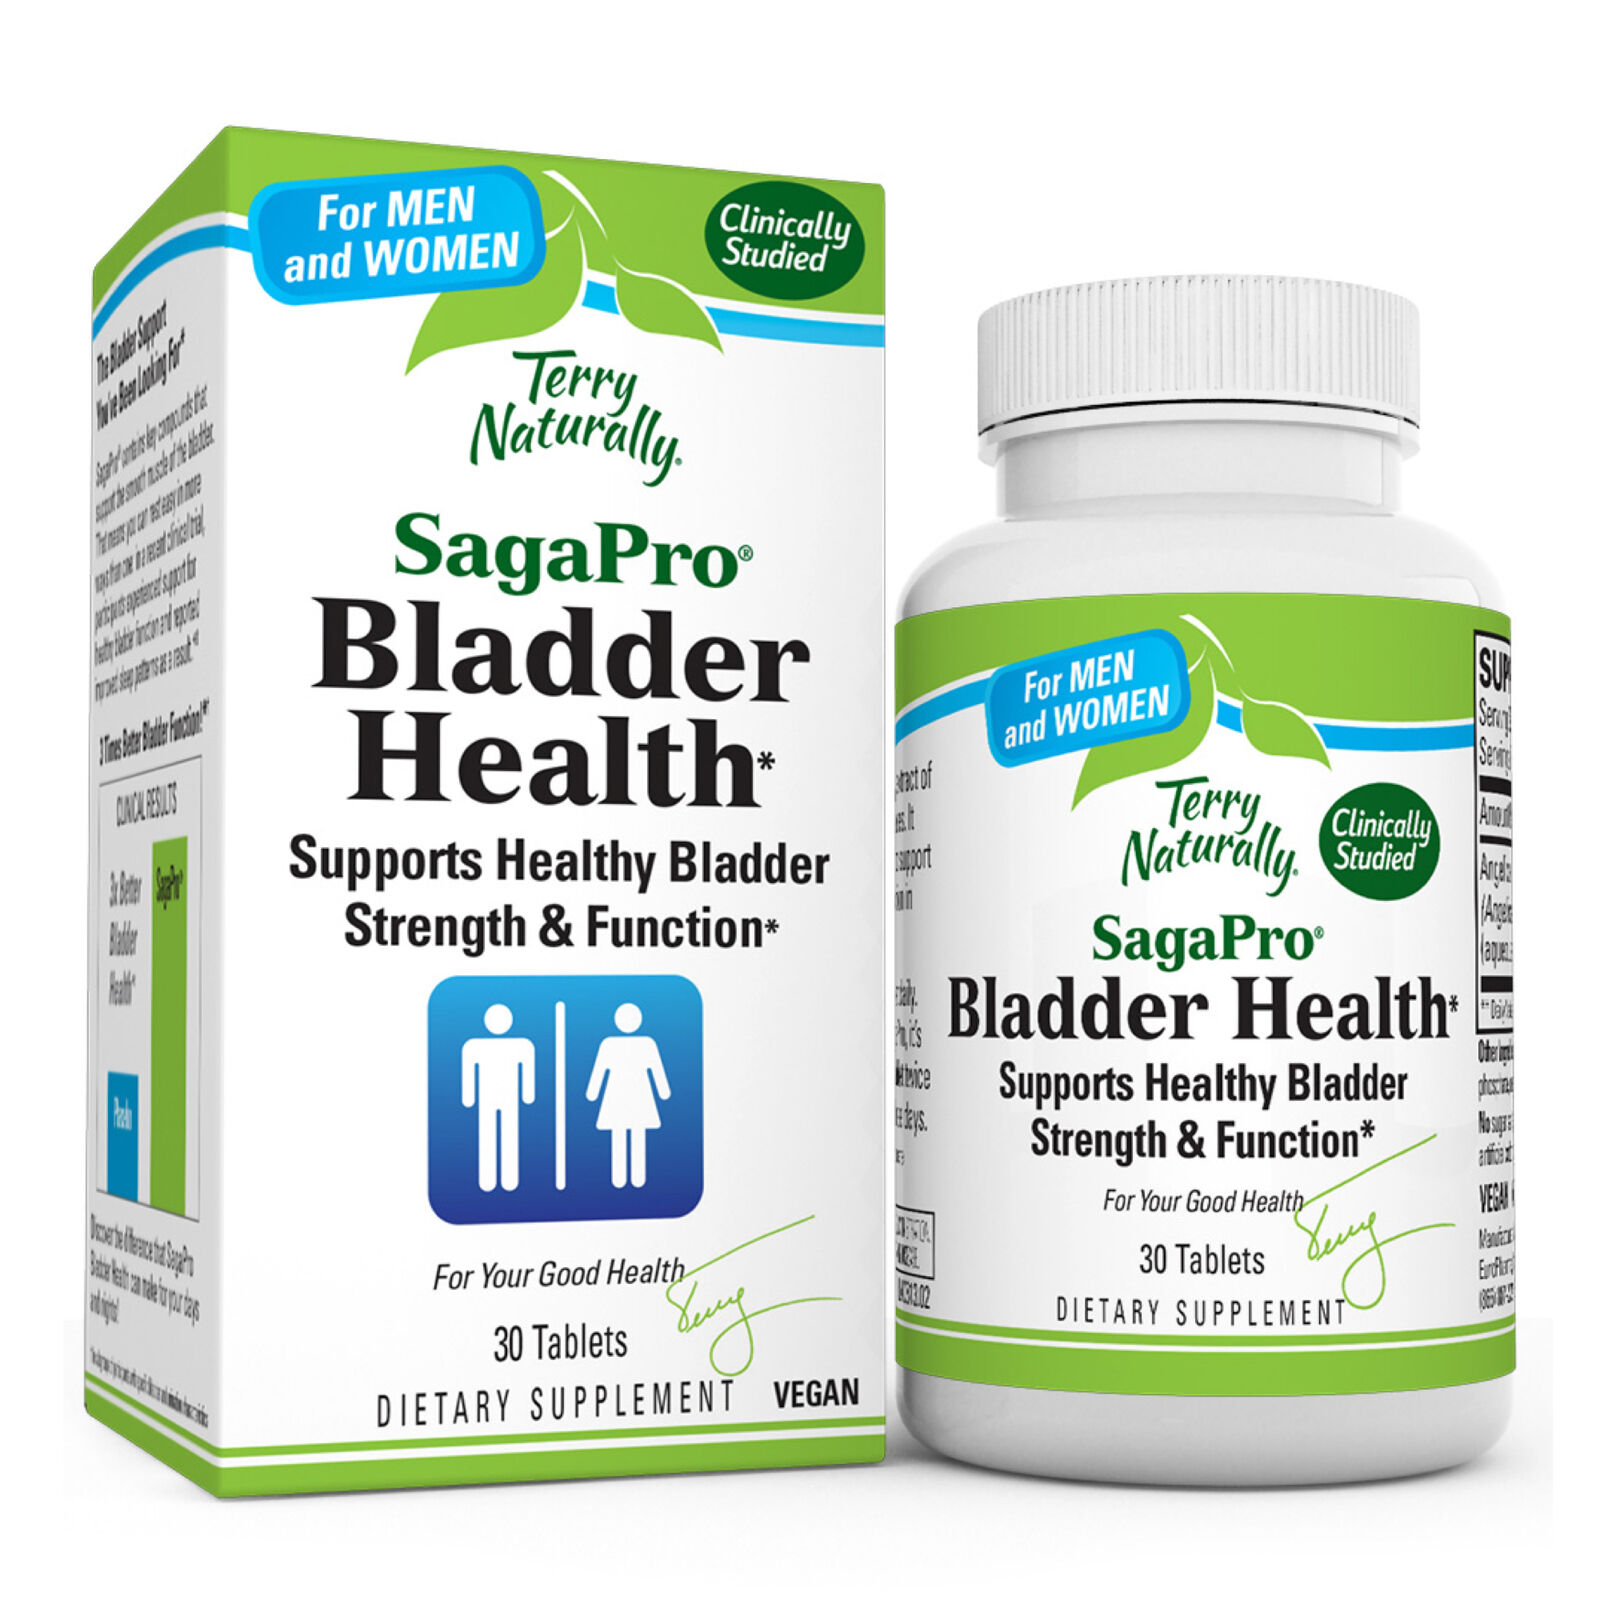 Terry Naturally SagaPro Bladder Health - 100 mg Angelica Archangelica 30 Vegan